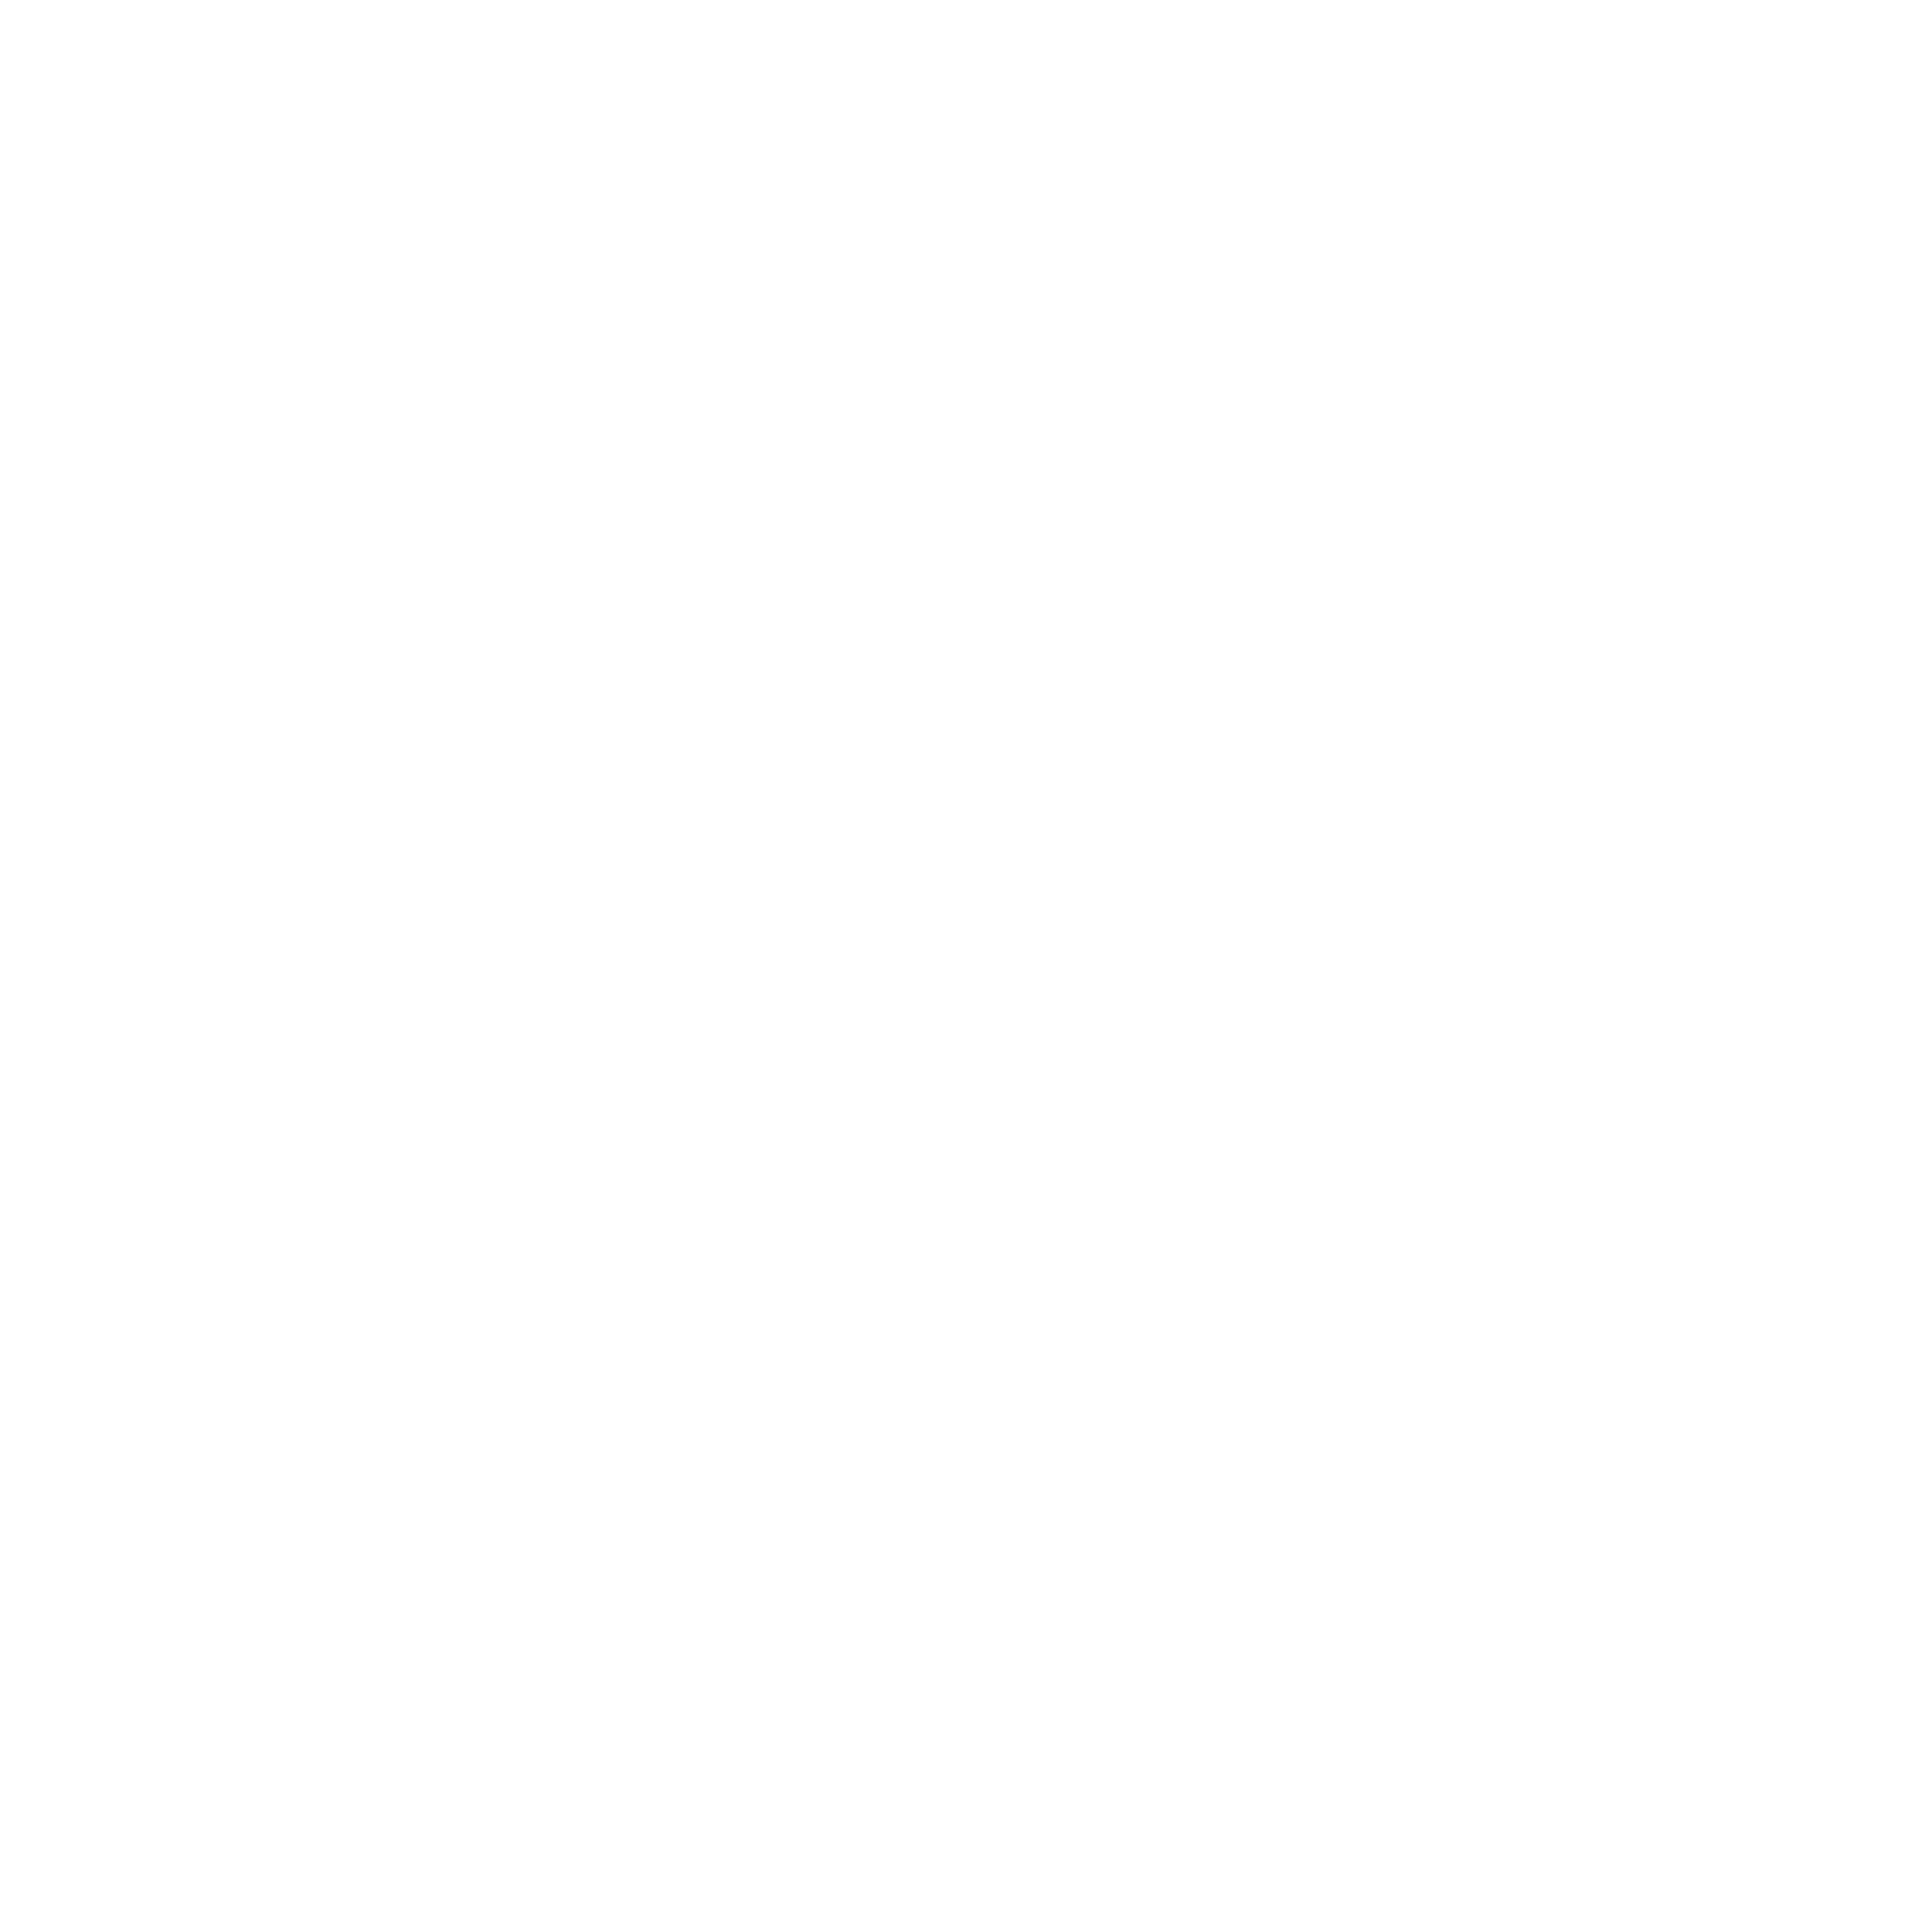 Cybersecurity Center of&nbsp;the Republic of&nbsp;Uzbekistan